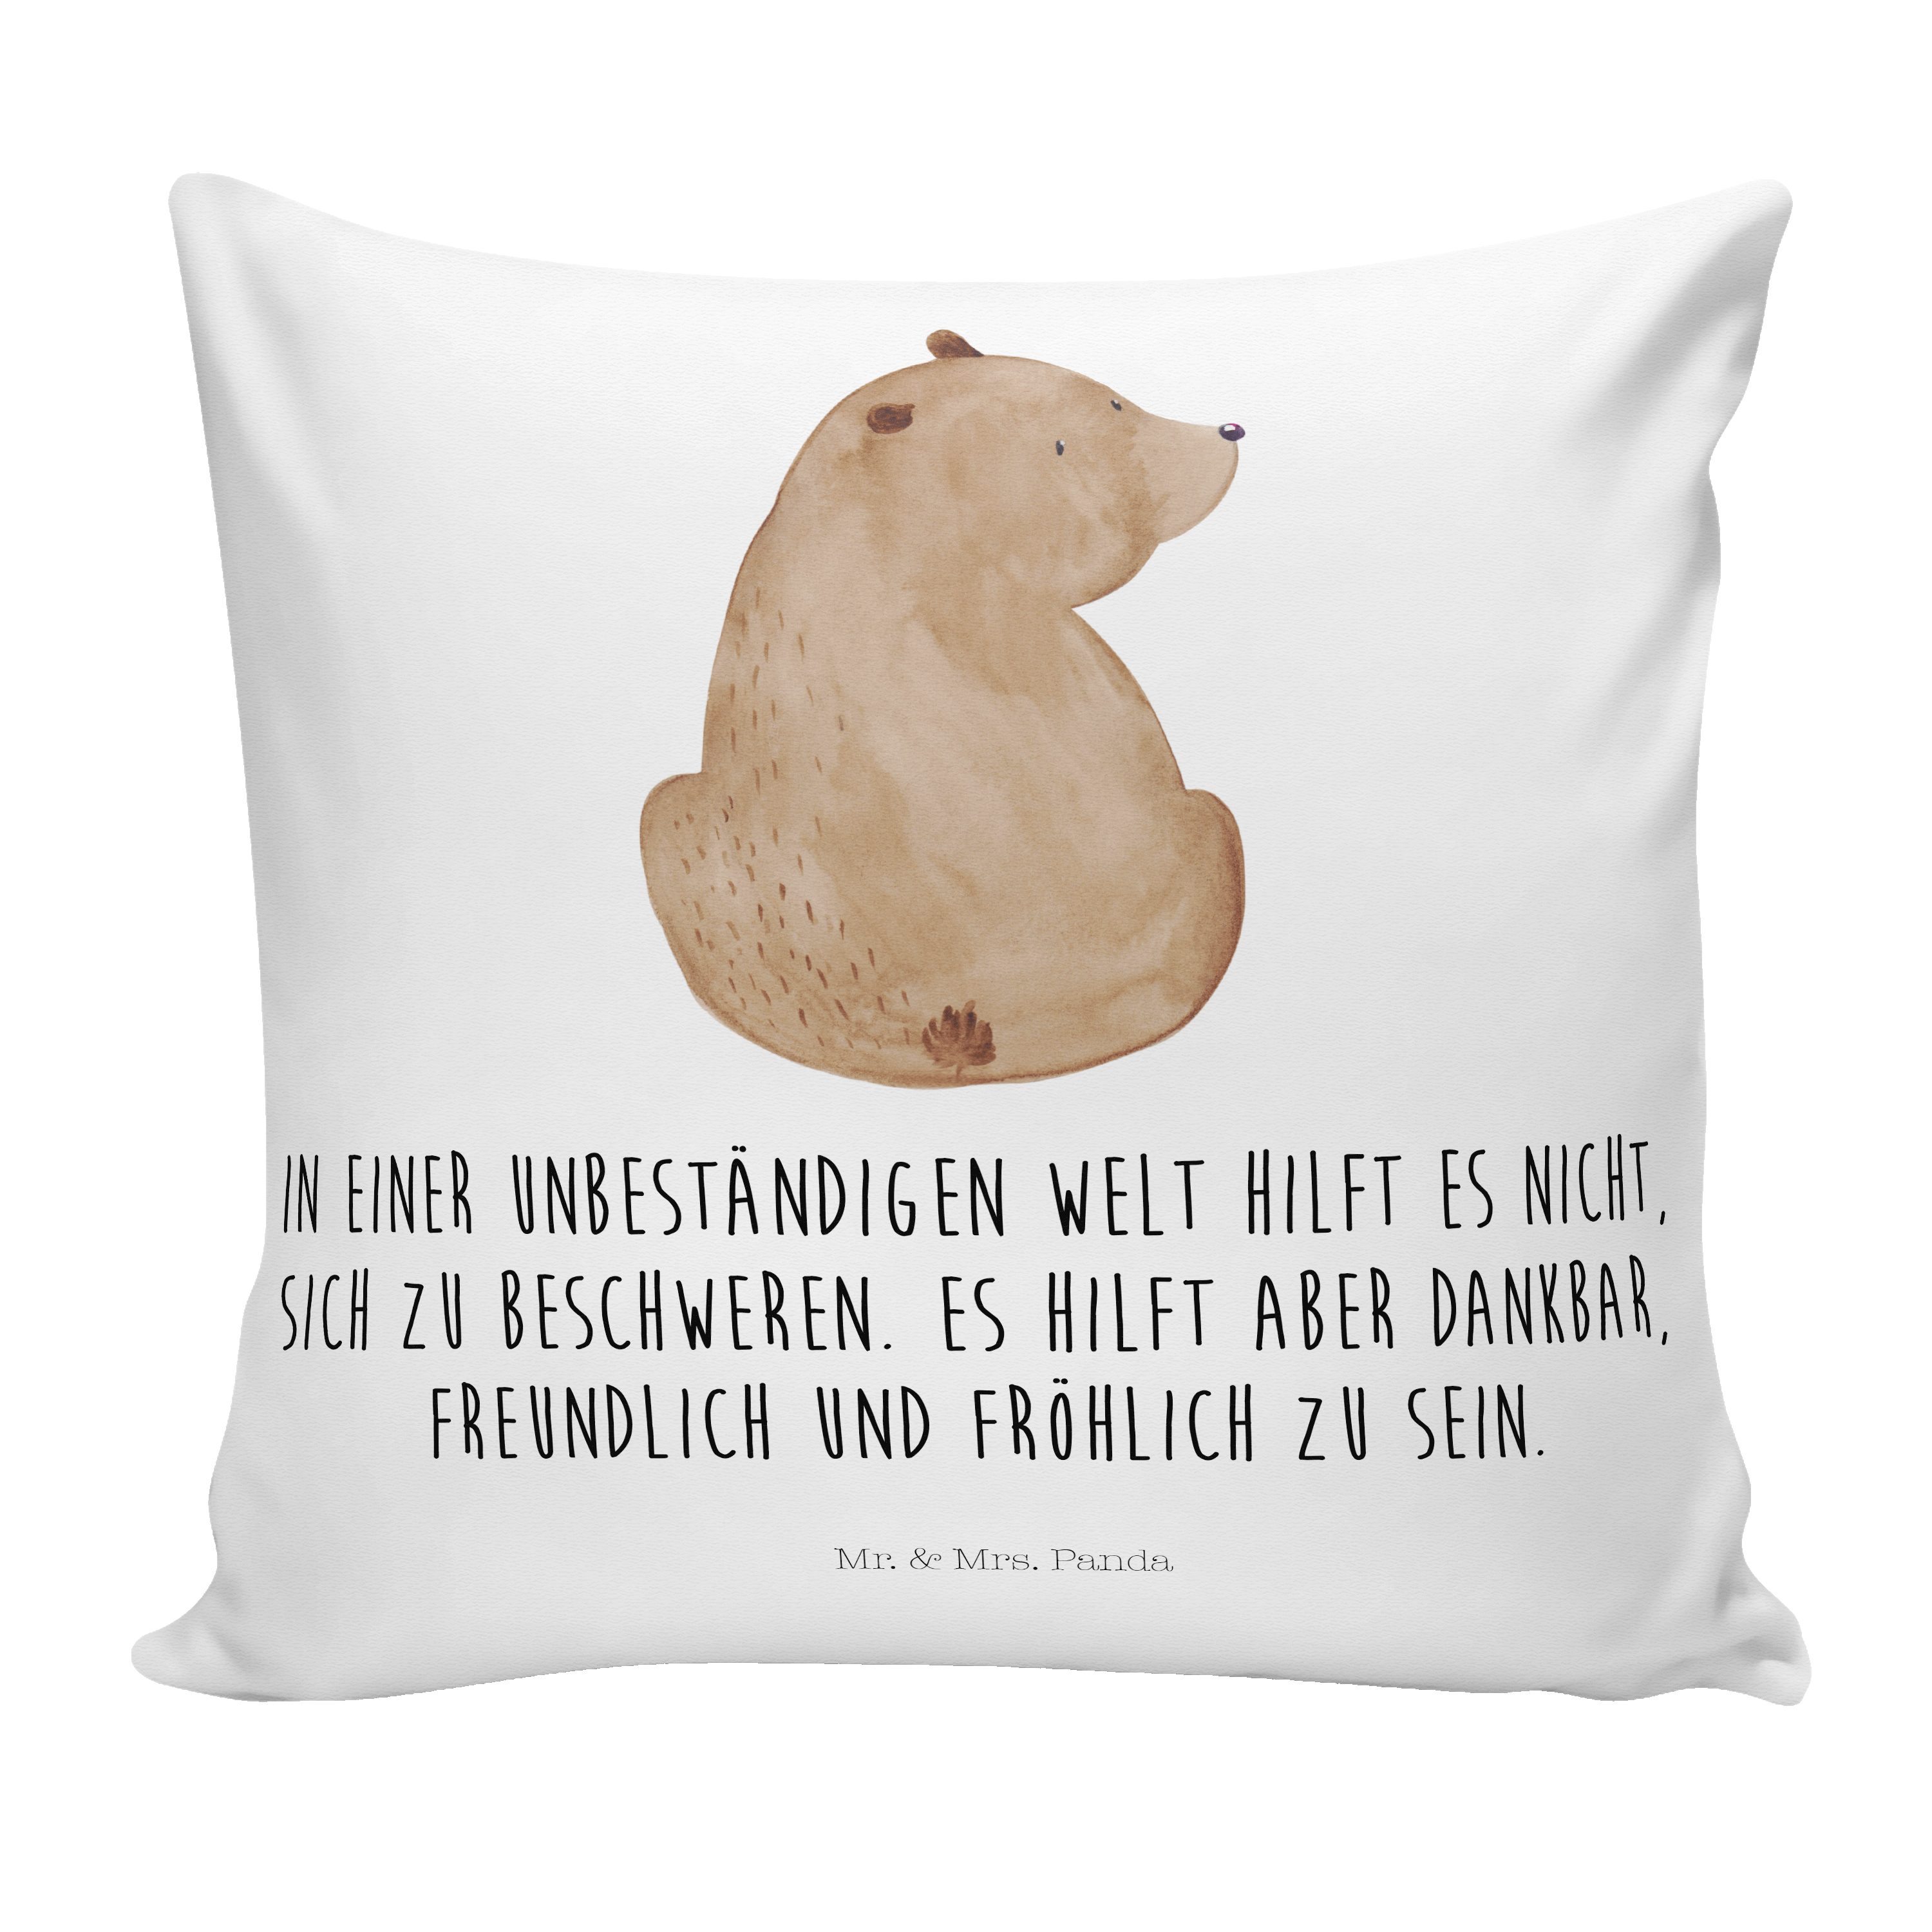 Mr. & Mrs. Panda Dekokissen Bär Schulterblick - Weiß - Geschenk, Kissenhülle, Teddybär, Bärenlieb